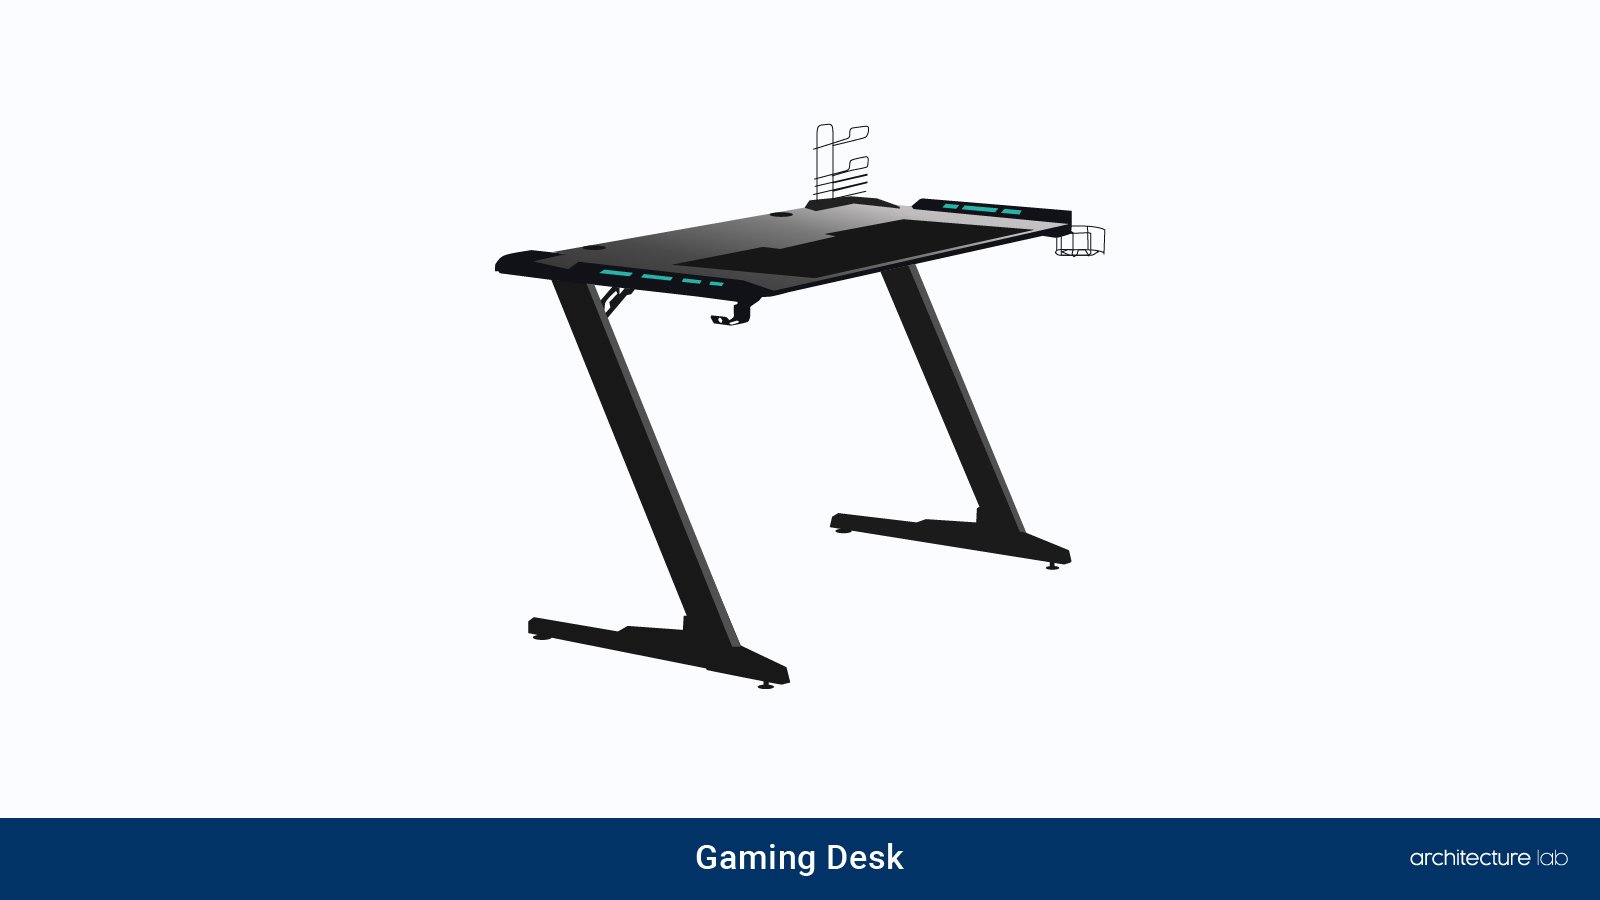 11. Gaming desk